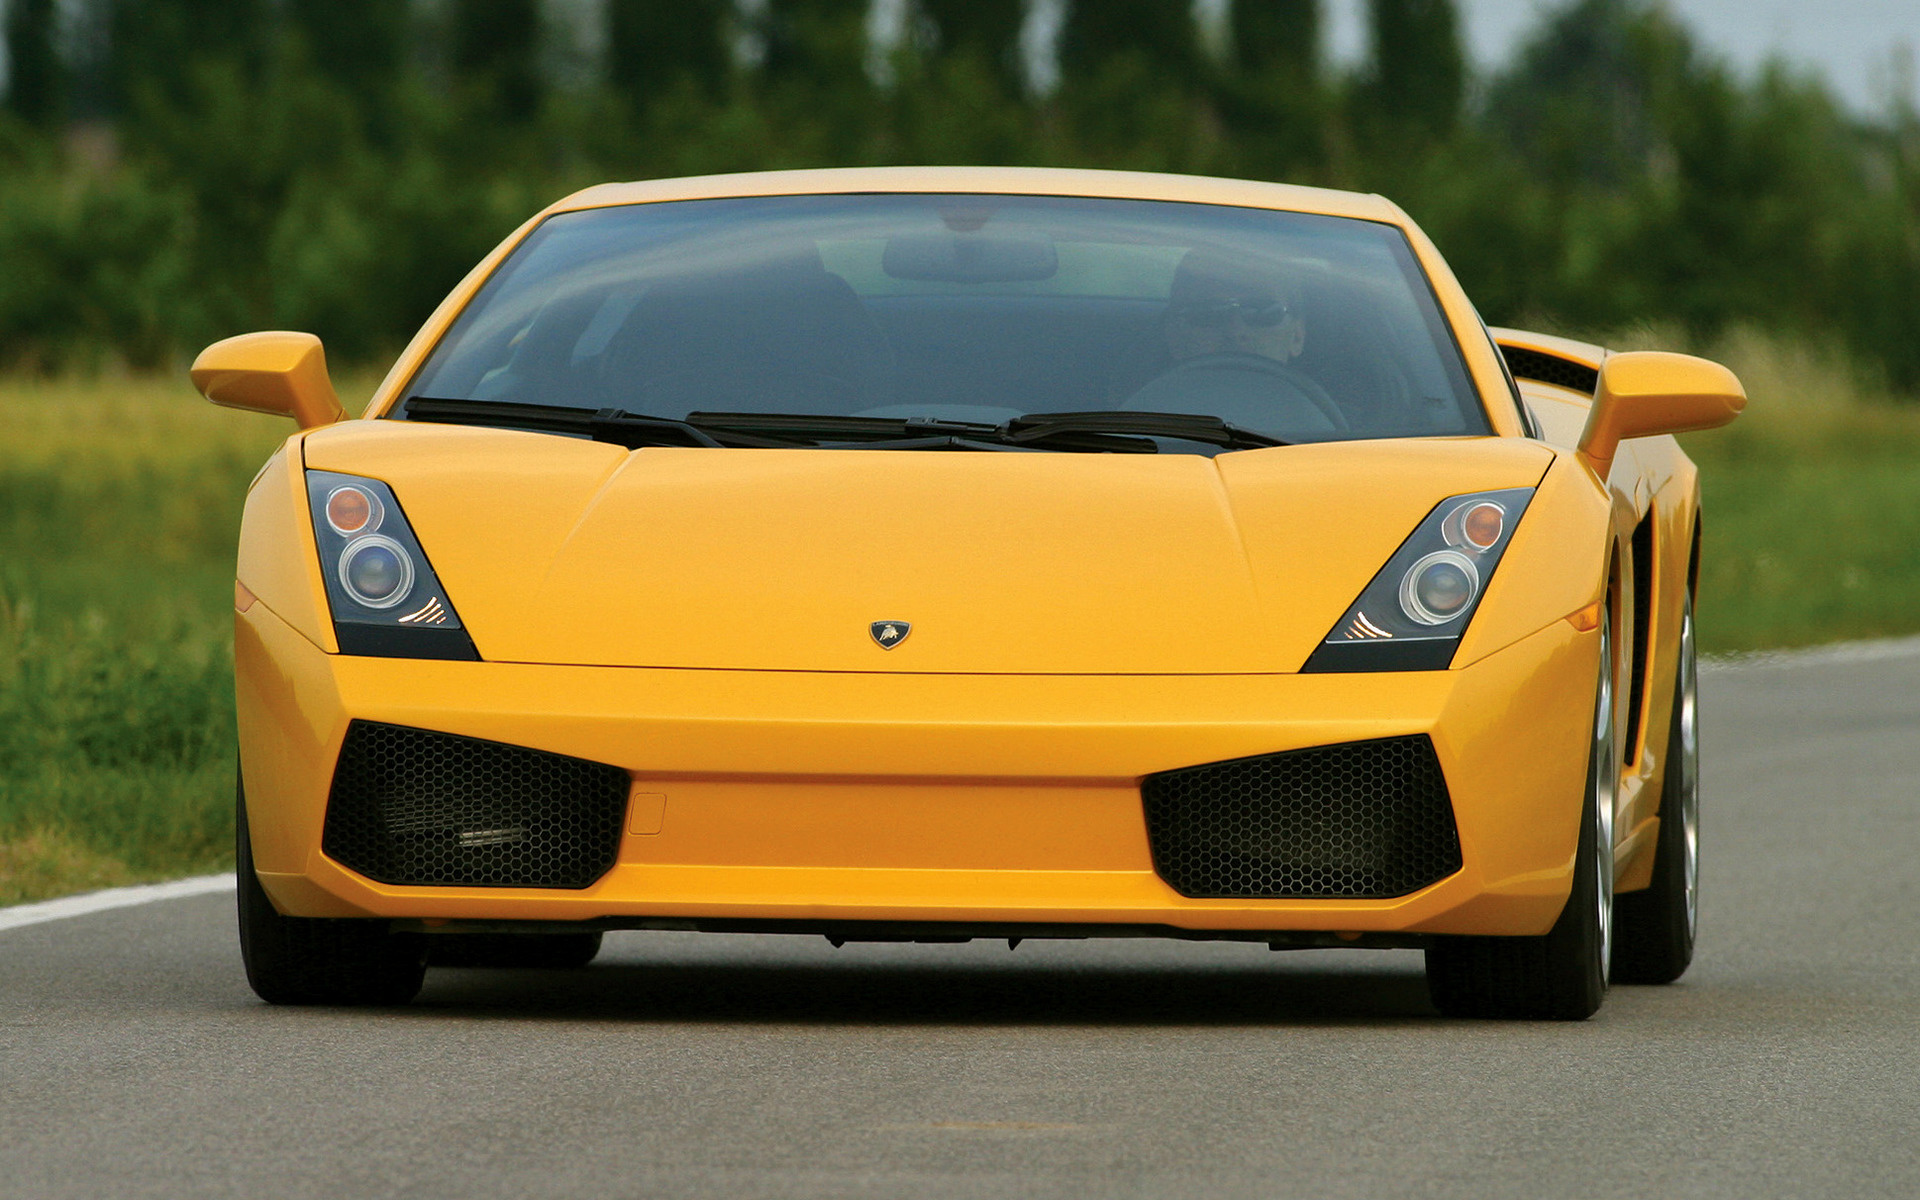 2003 Lamborghini Gallardo, HD wallpapers, Automotive art, Stunning imagery, 1920x1200 HD Desktop